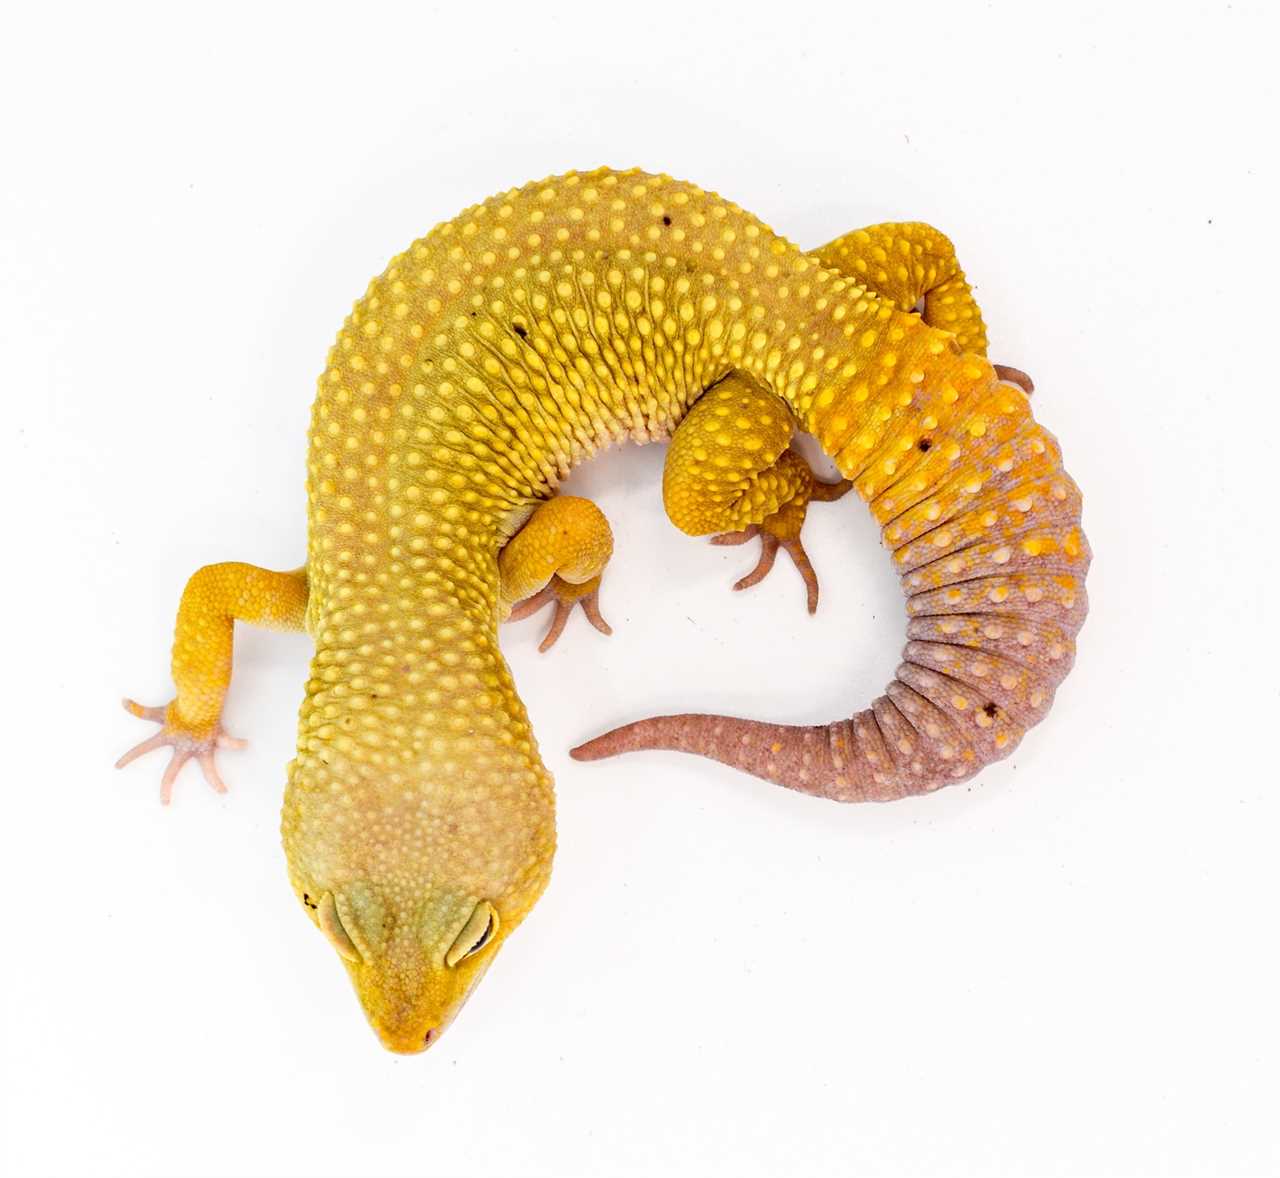 Patternless leopard gecko